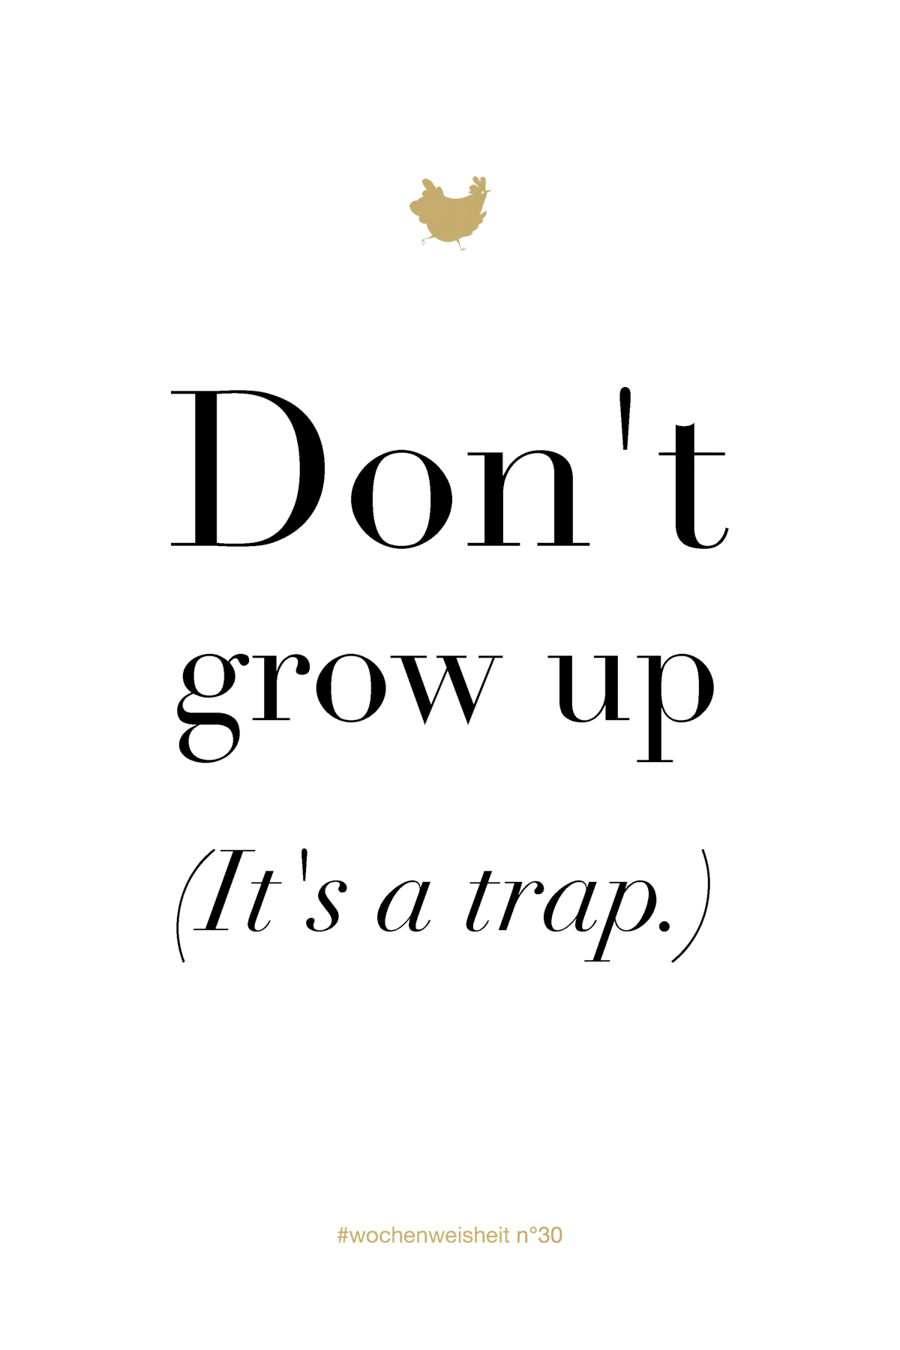 "Don't grow up, it's a trap" Peter Pan // Wochenweisheit von Chez Mama Poule #parenting #quote #wisdom #zitate #peterpan #elternsein